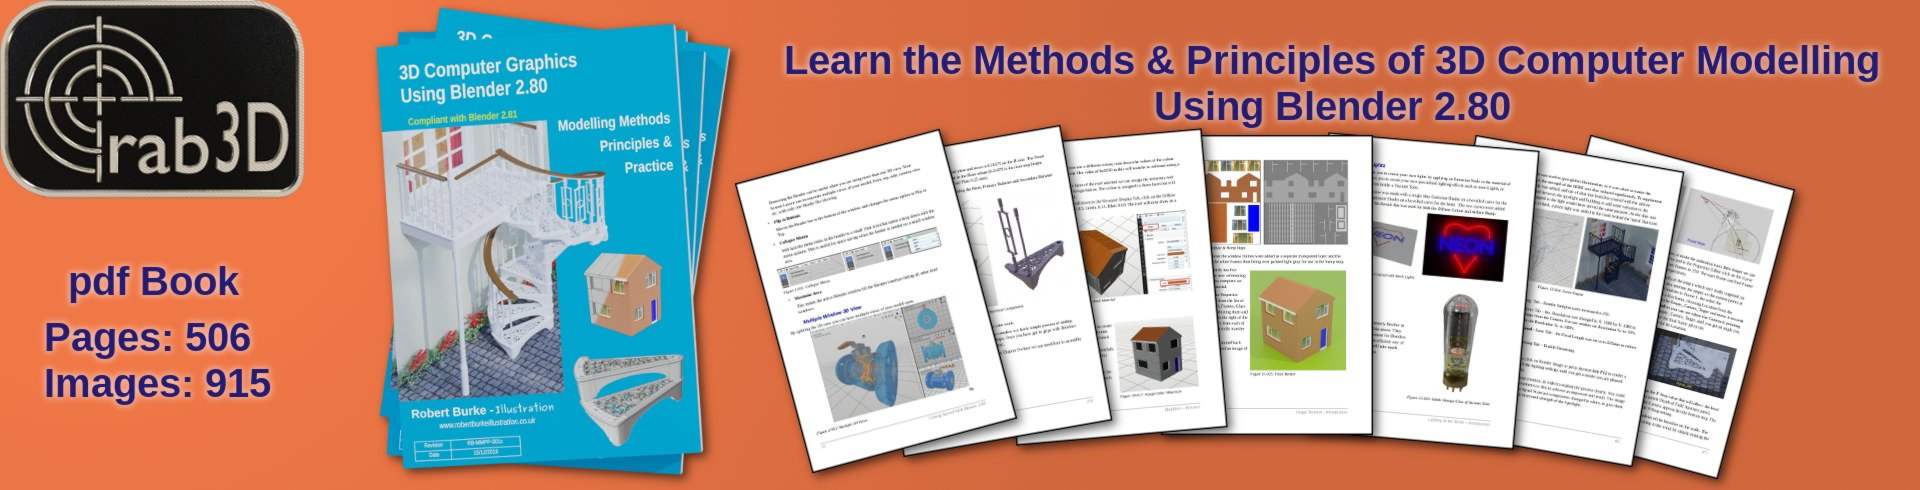 3D Computer Graphics Using Blender 2.80 - Modelling Methods, Principles & Practice